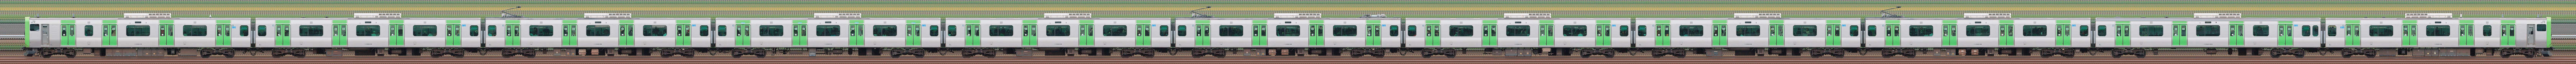 JR東日本 山手線 E235系トウ30編成（線路設備モニタリング装置対応編成・逆サイド）の編成サイドビュー